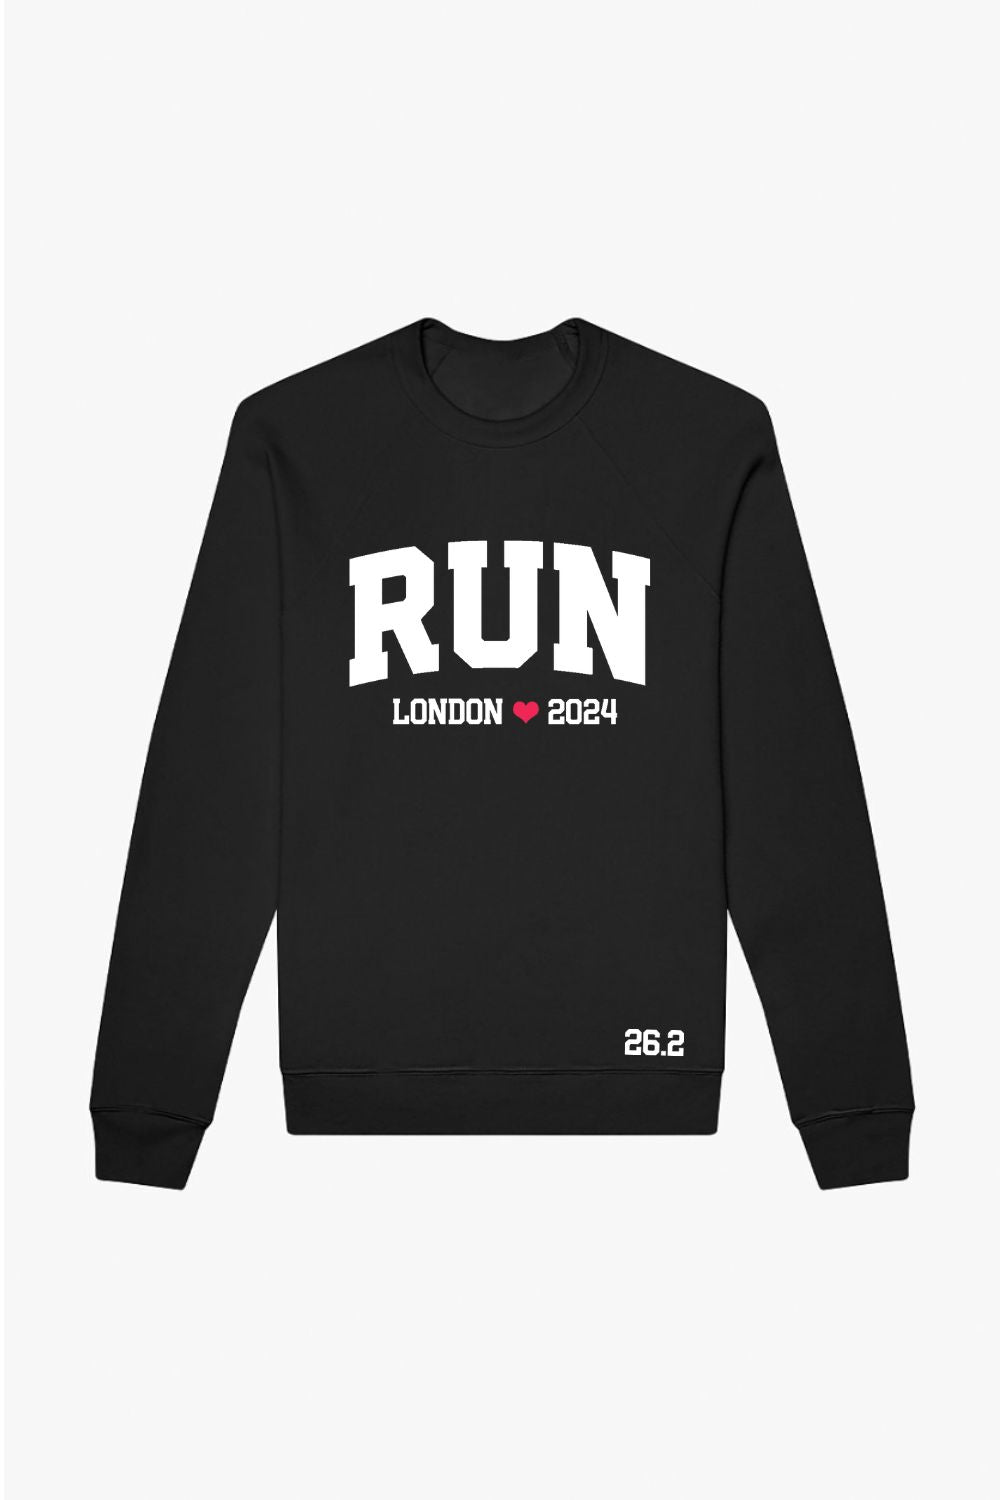 RUN London 2024 Marathon Sweatshirt